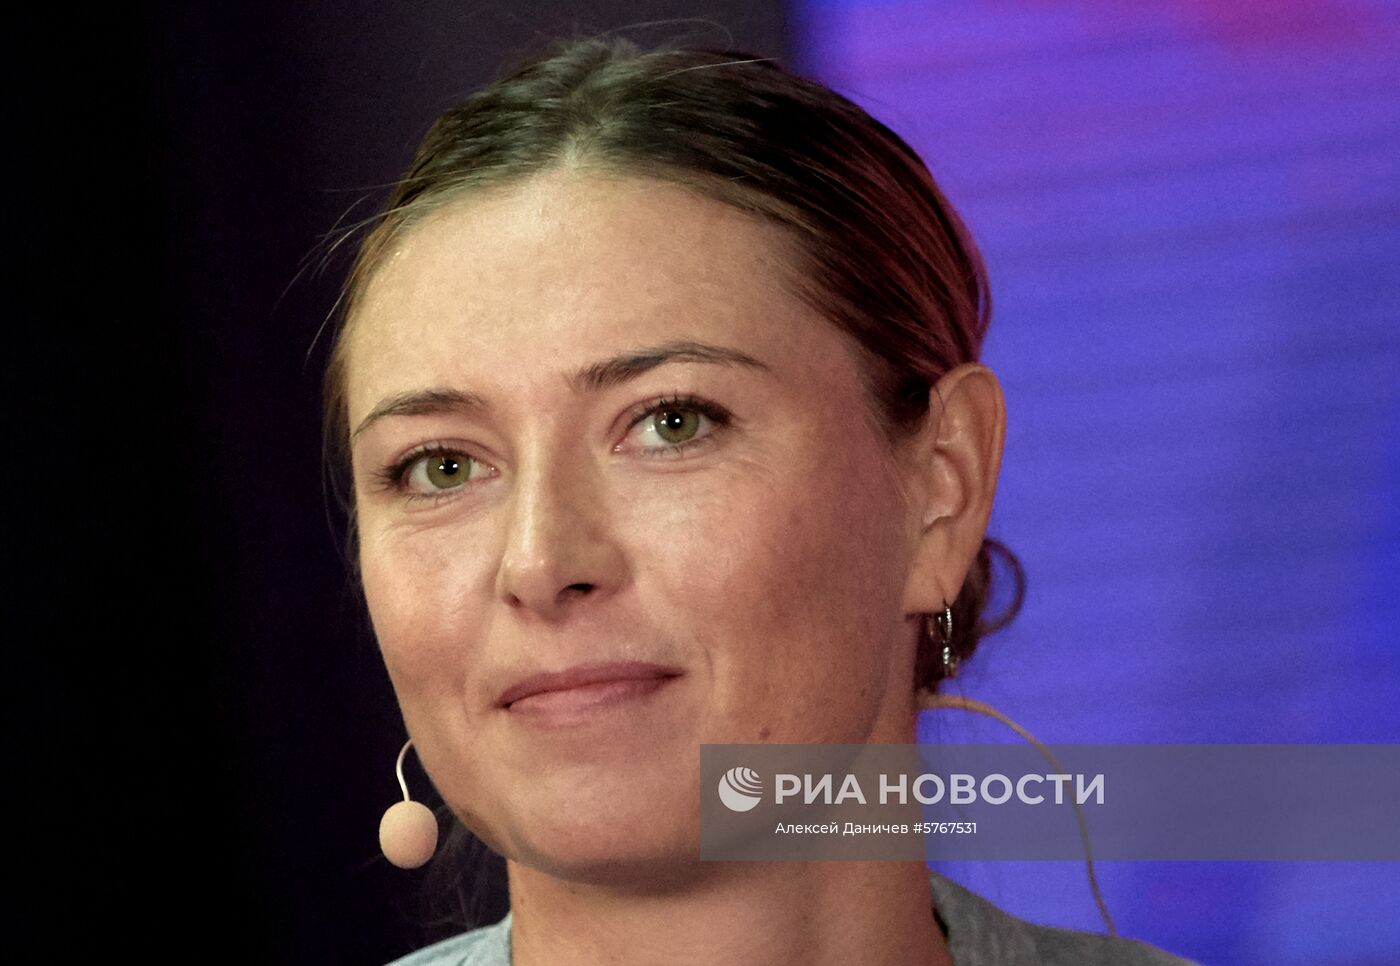 Теннисистка М. Шарапова снялась с турнира в Санкт-Петербурге